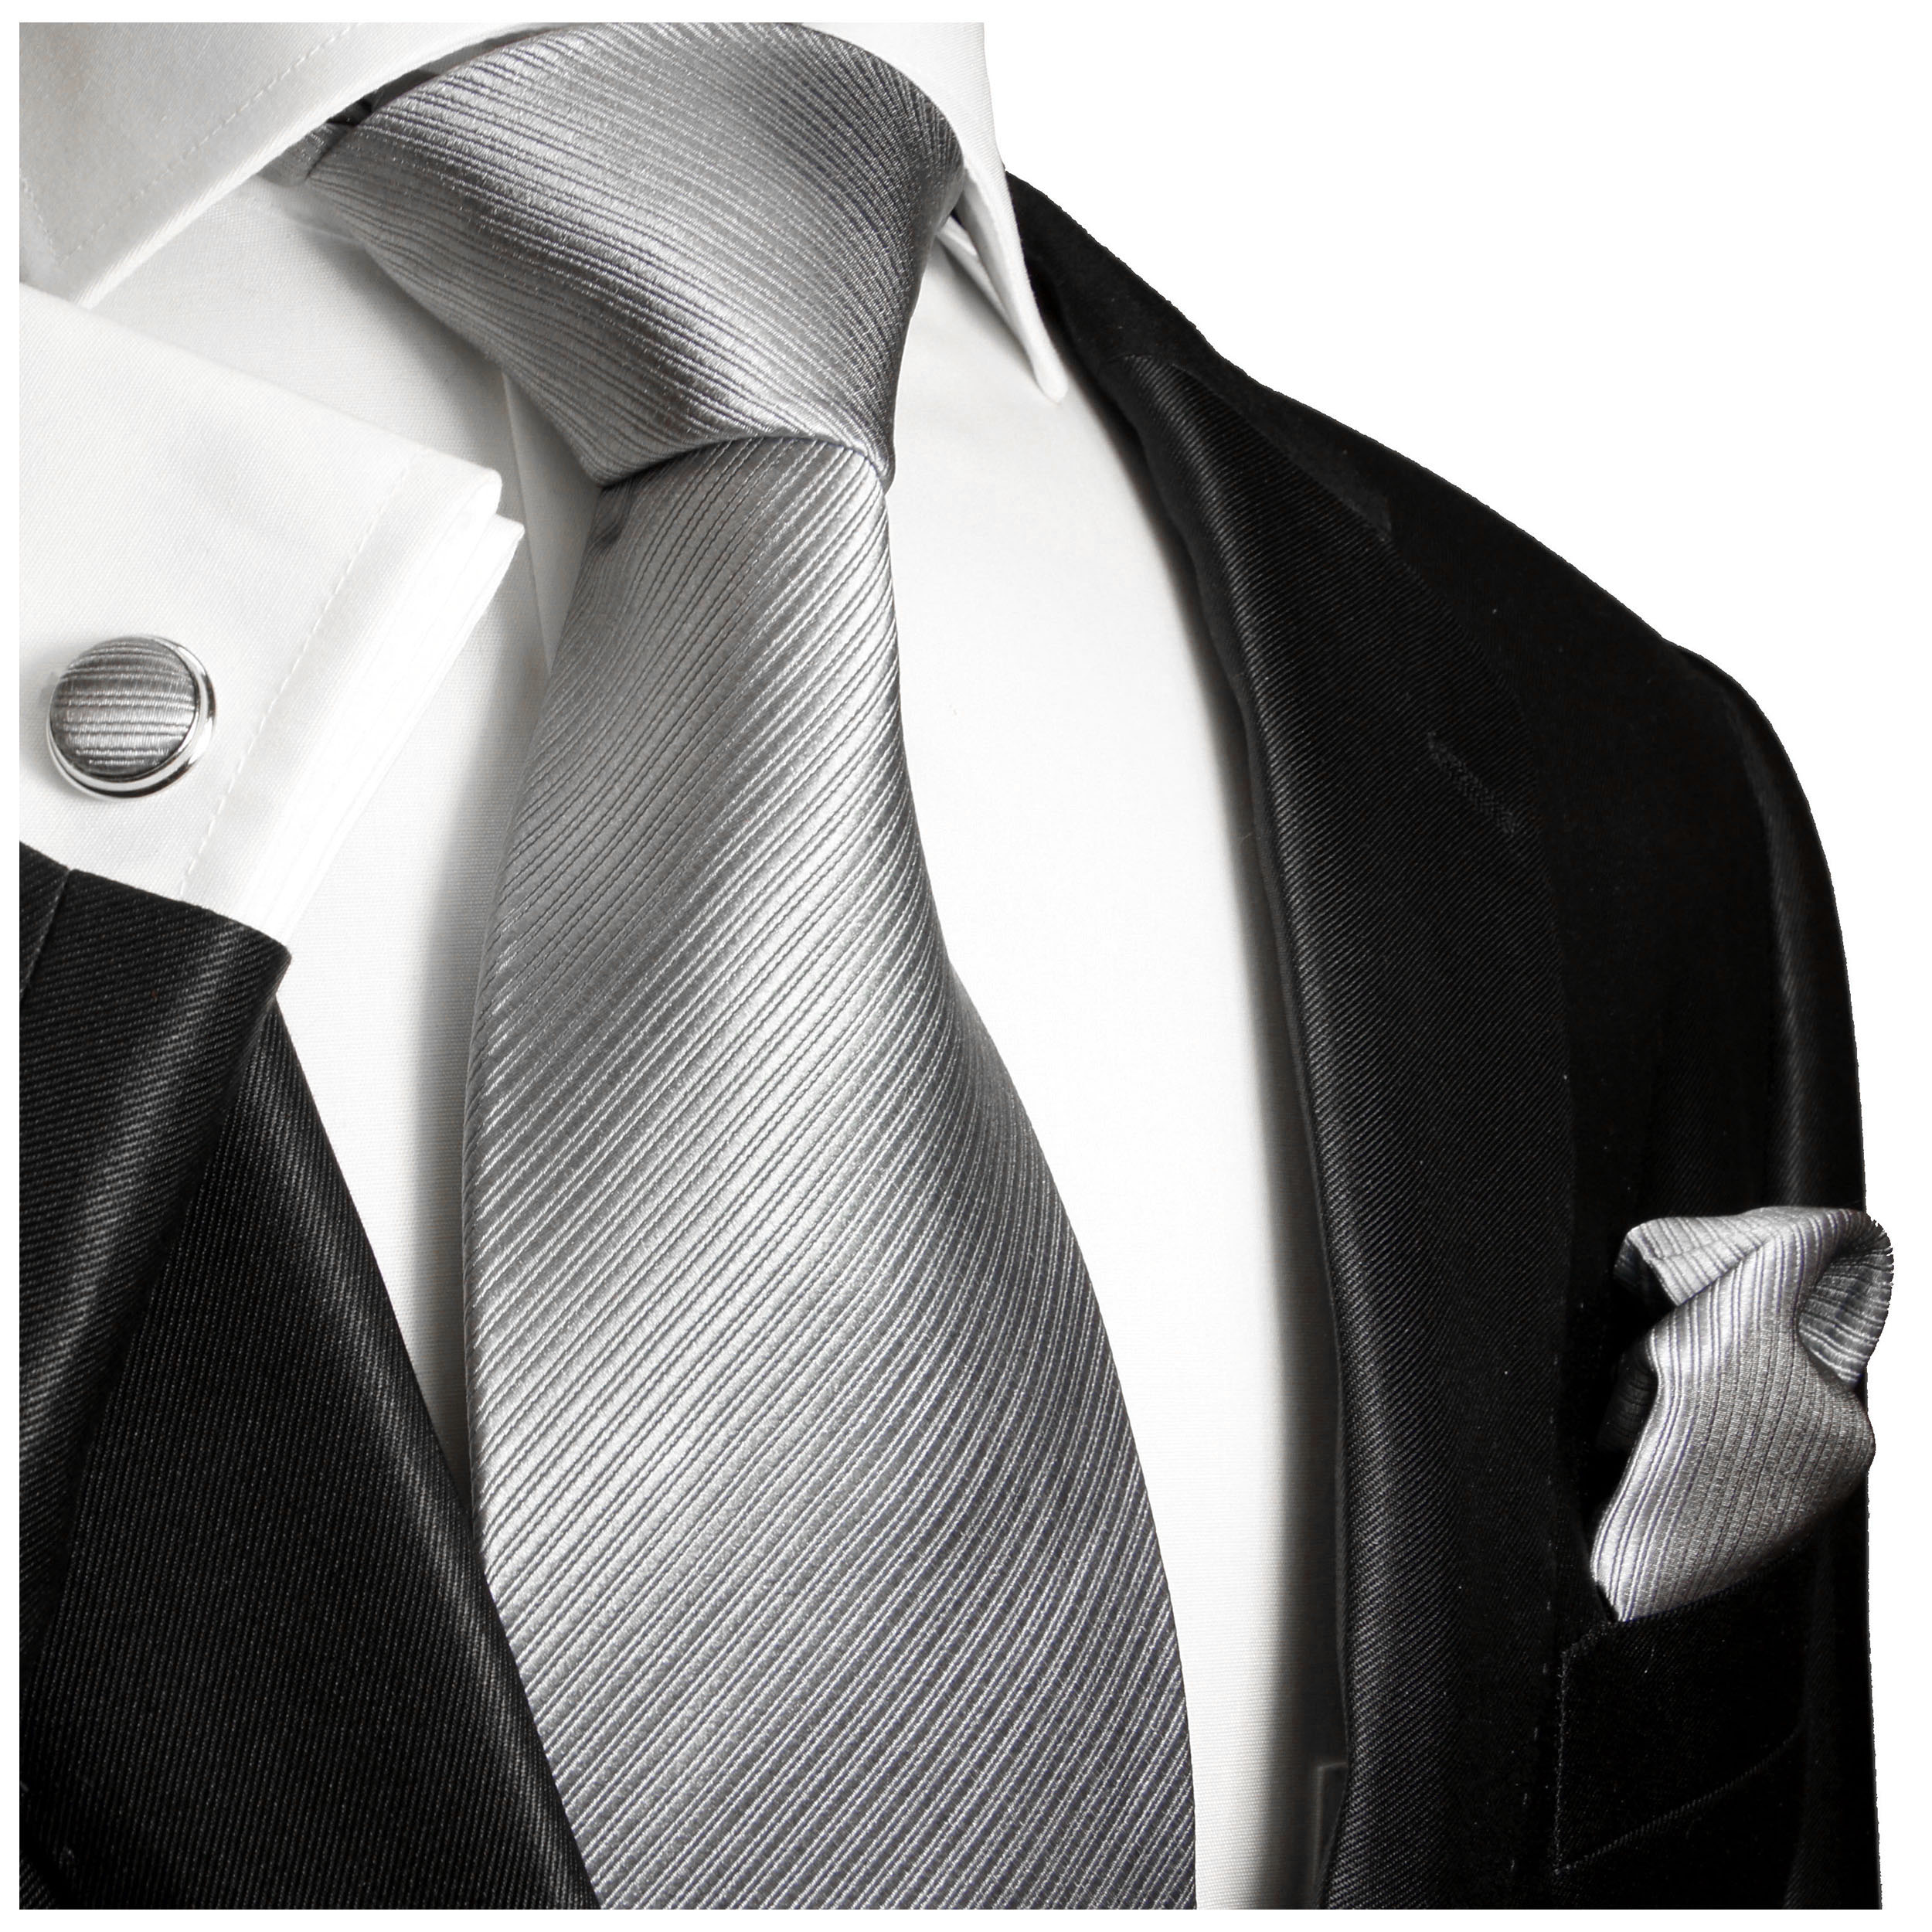 Shop 977 - BESTELLEN silber uni Krawatte grau JETZT Malone | Paul